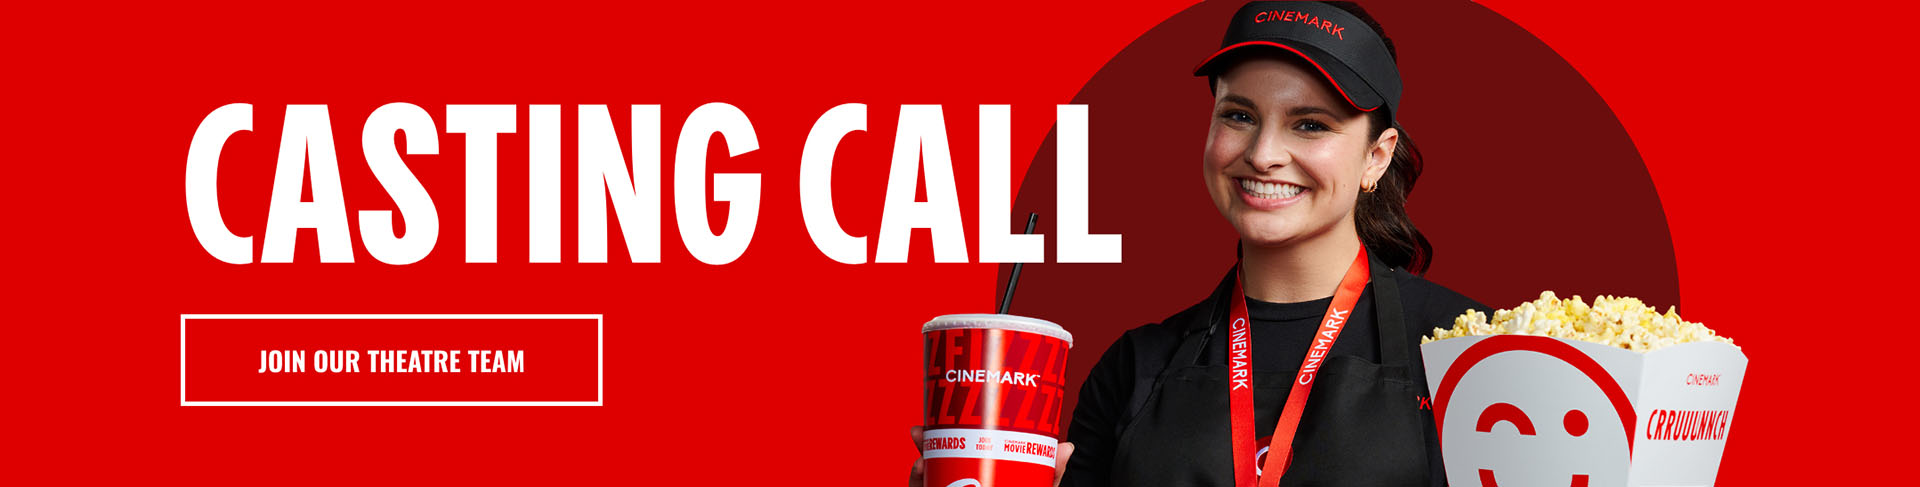 Cinemark employee holding a Cinemark soda and popcorn.